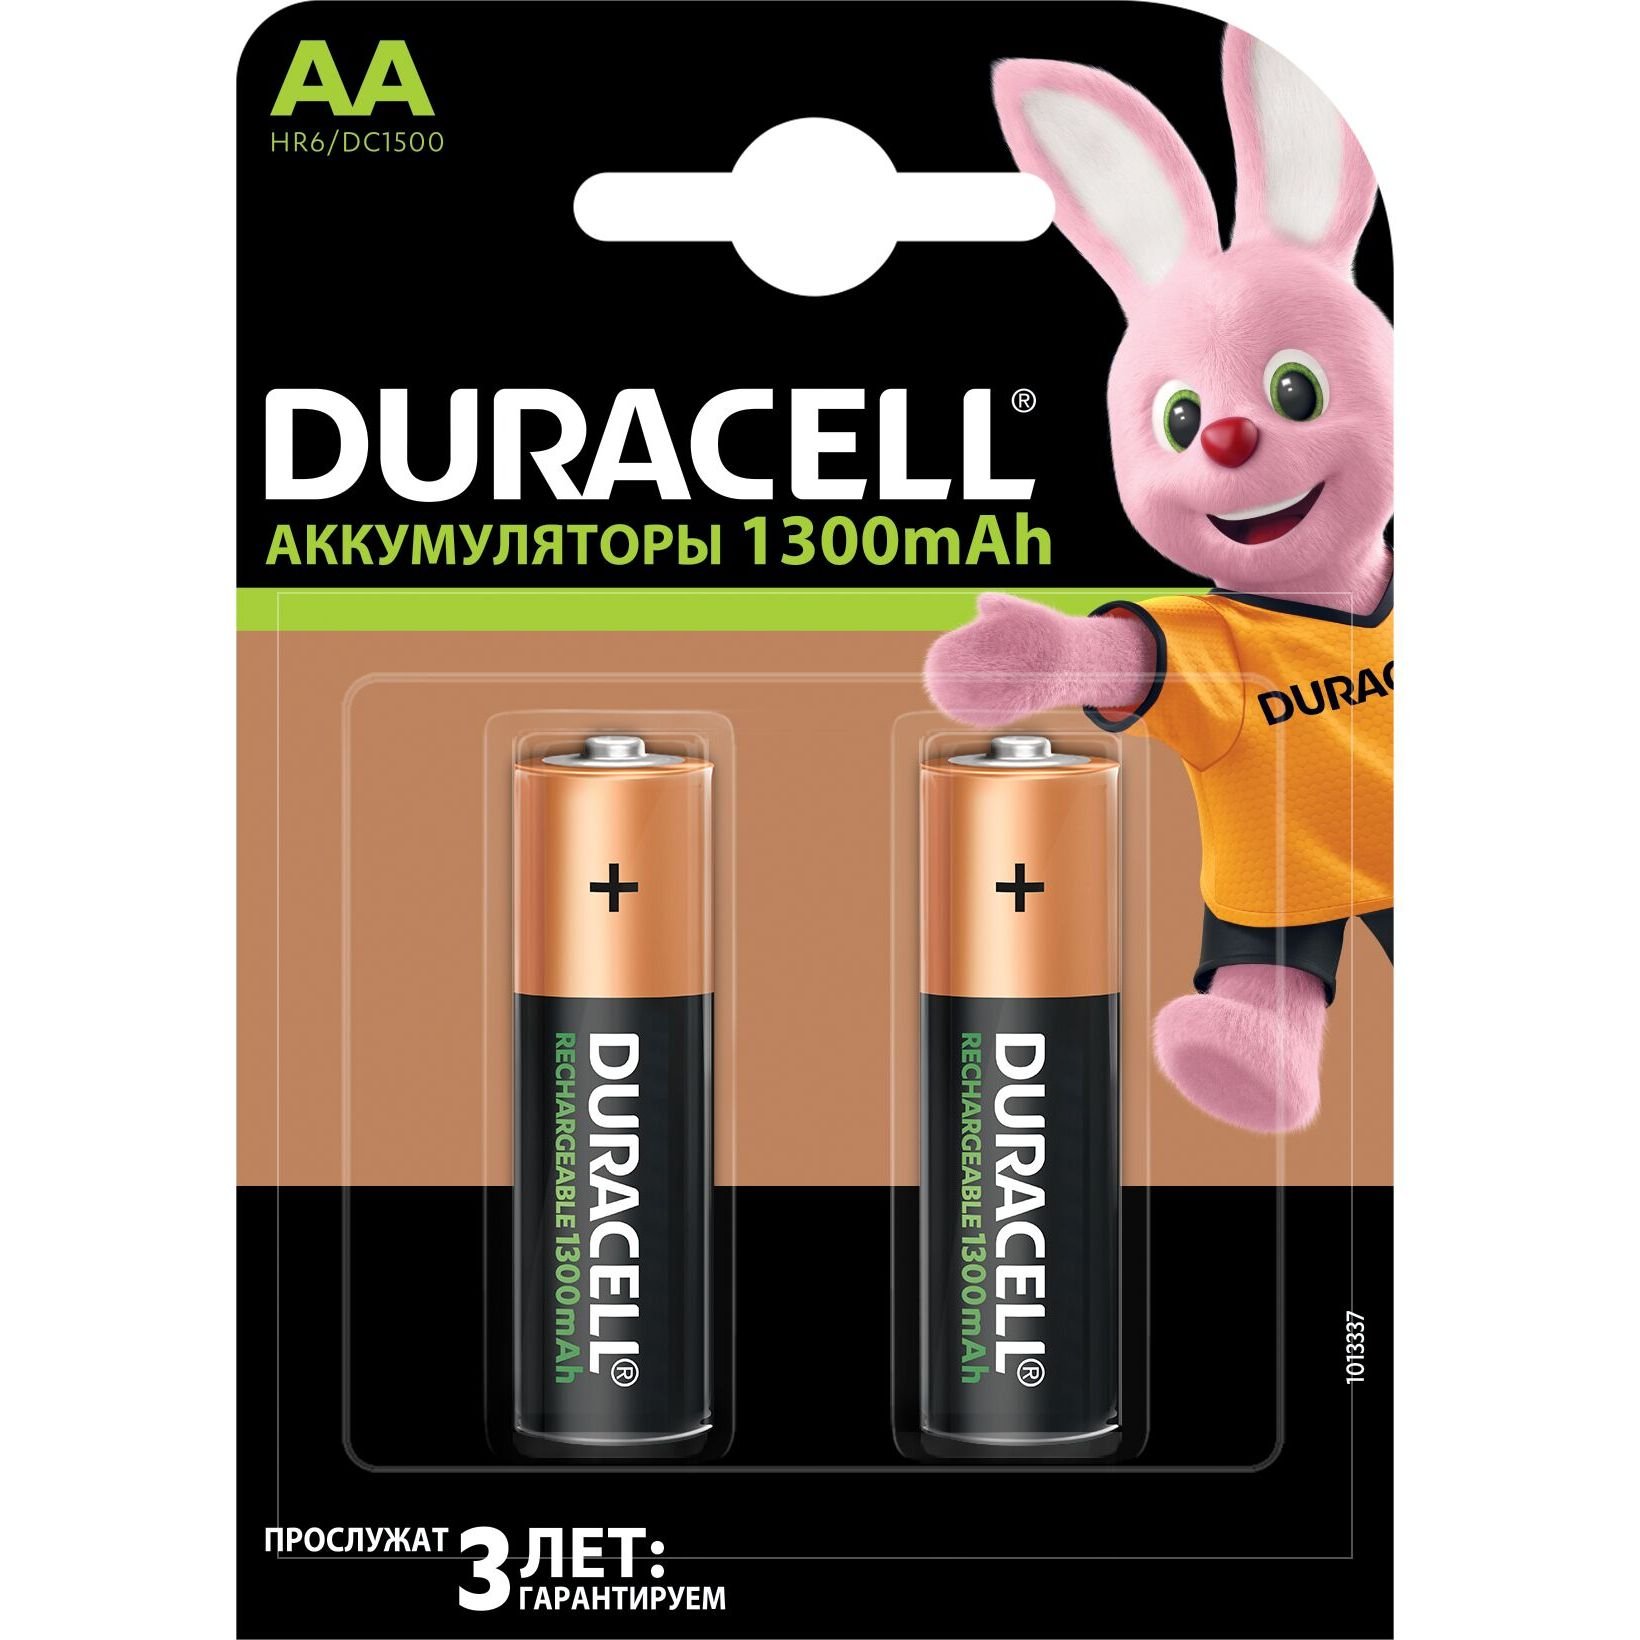 Акумулятори Duracell Rechargeable AA 1300 mAh HR6/DC1500, 2 шт. (736720) - фото 2